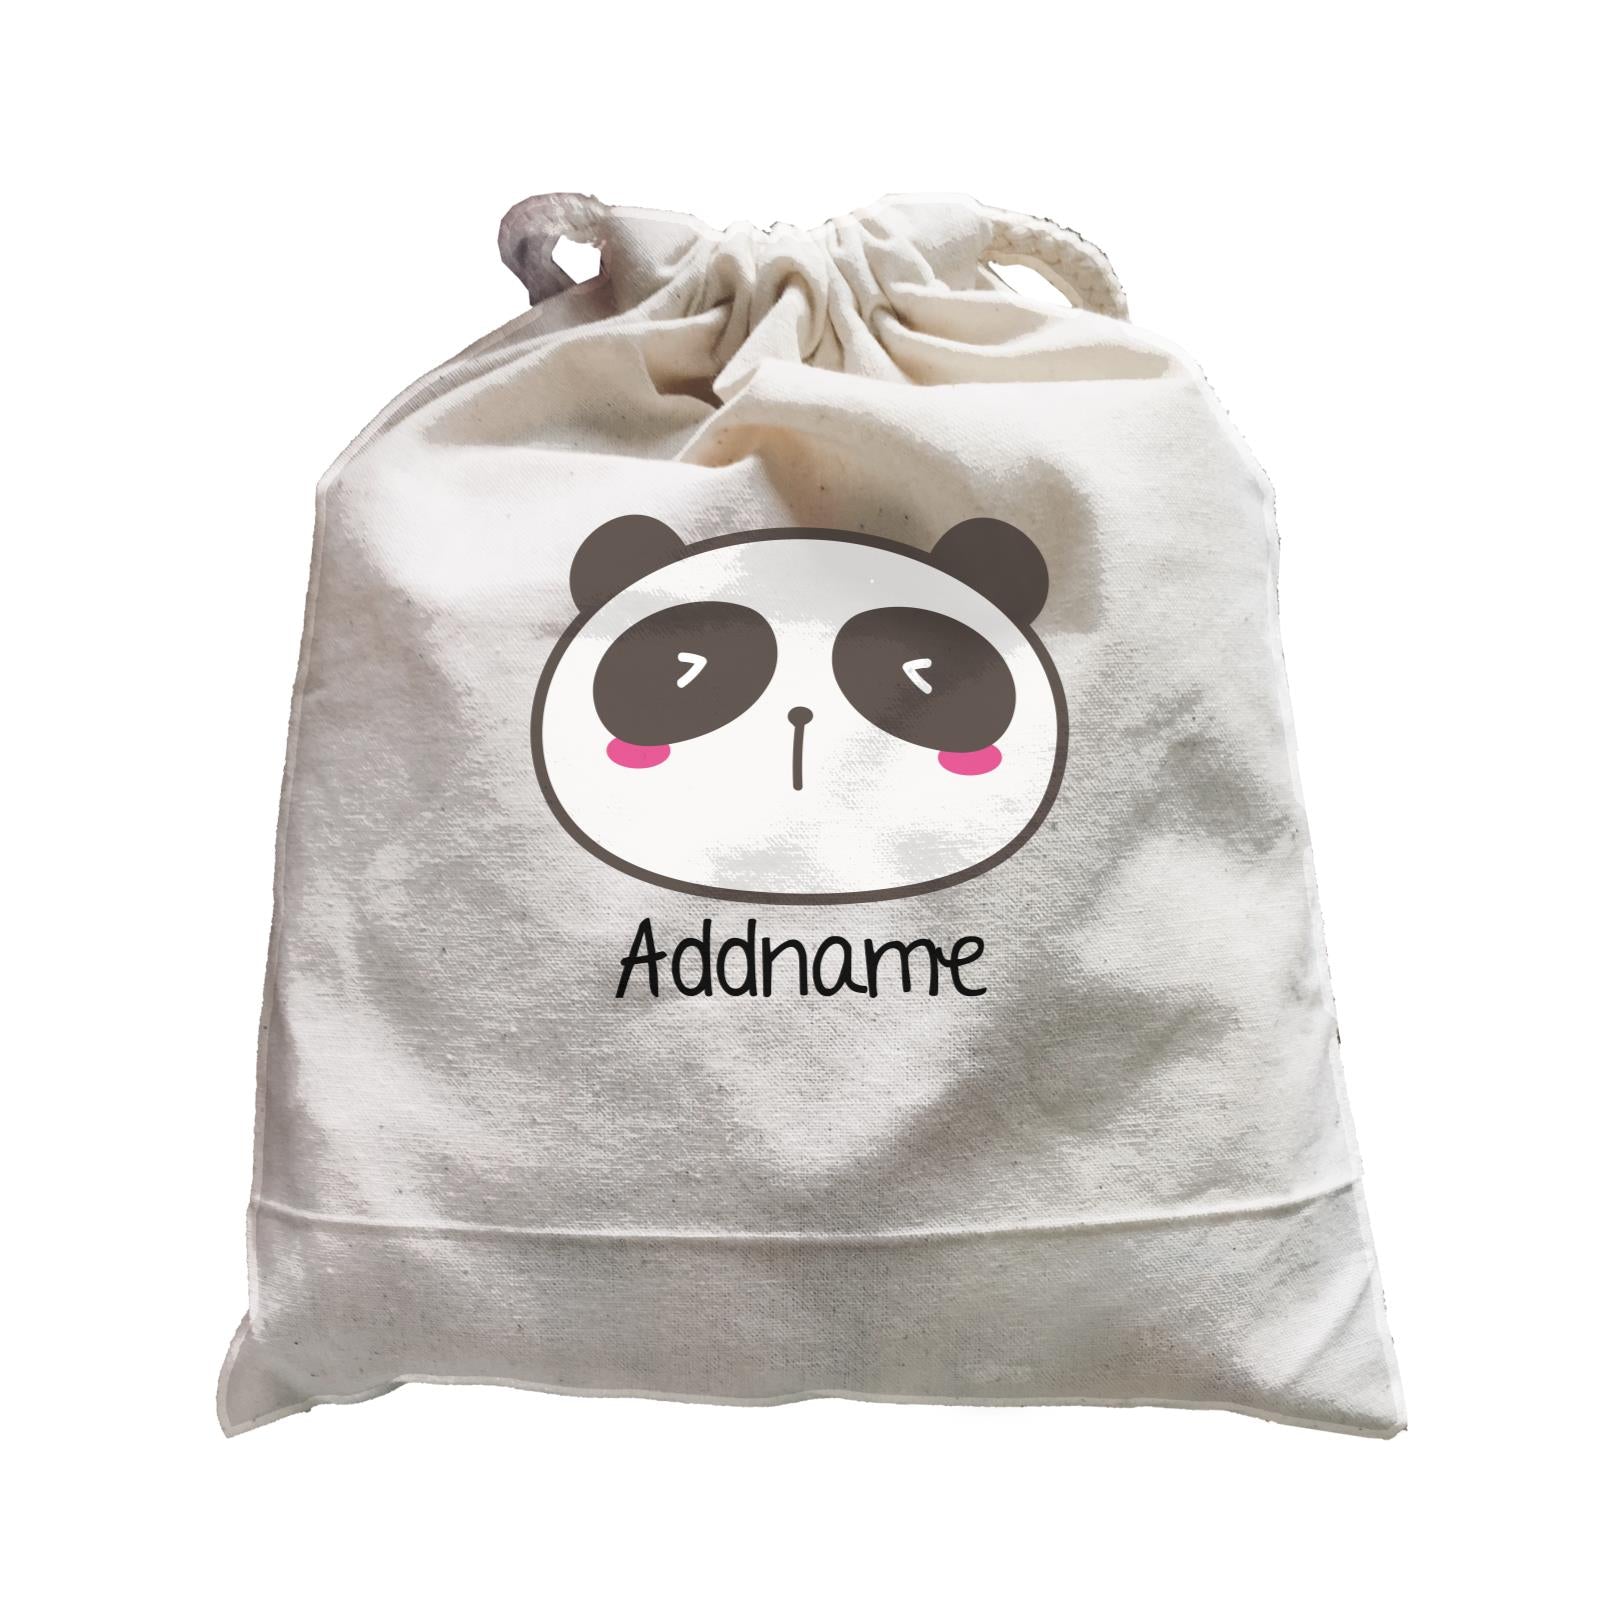 Cute Animals And Friends Series Cute Panda Shy Addname Satchel